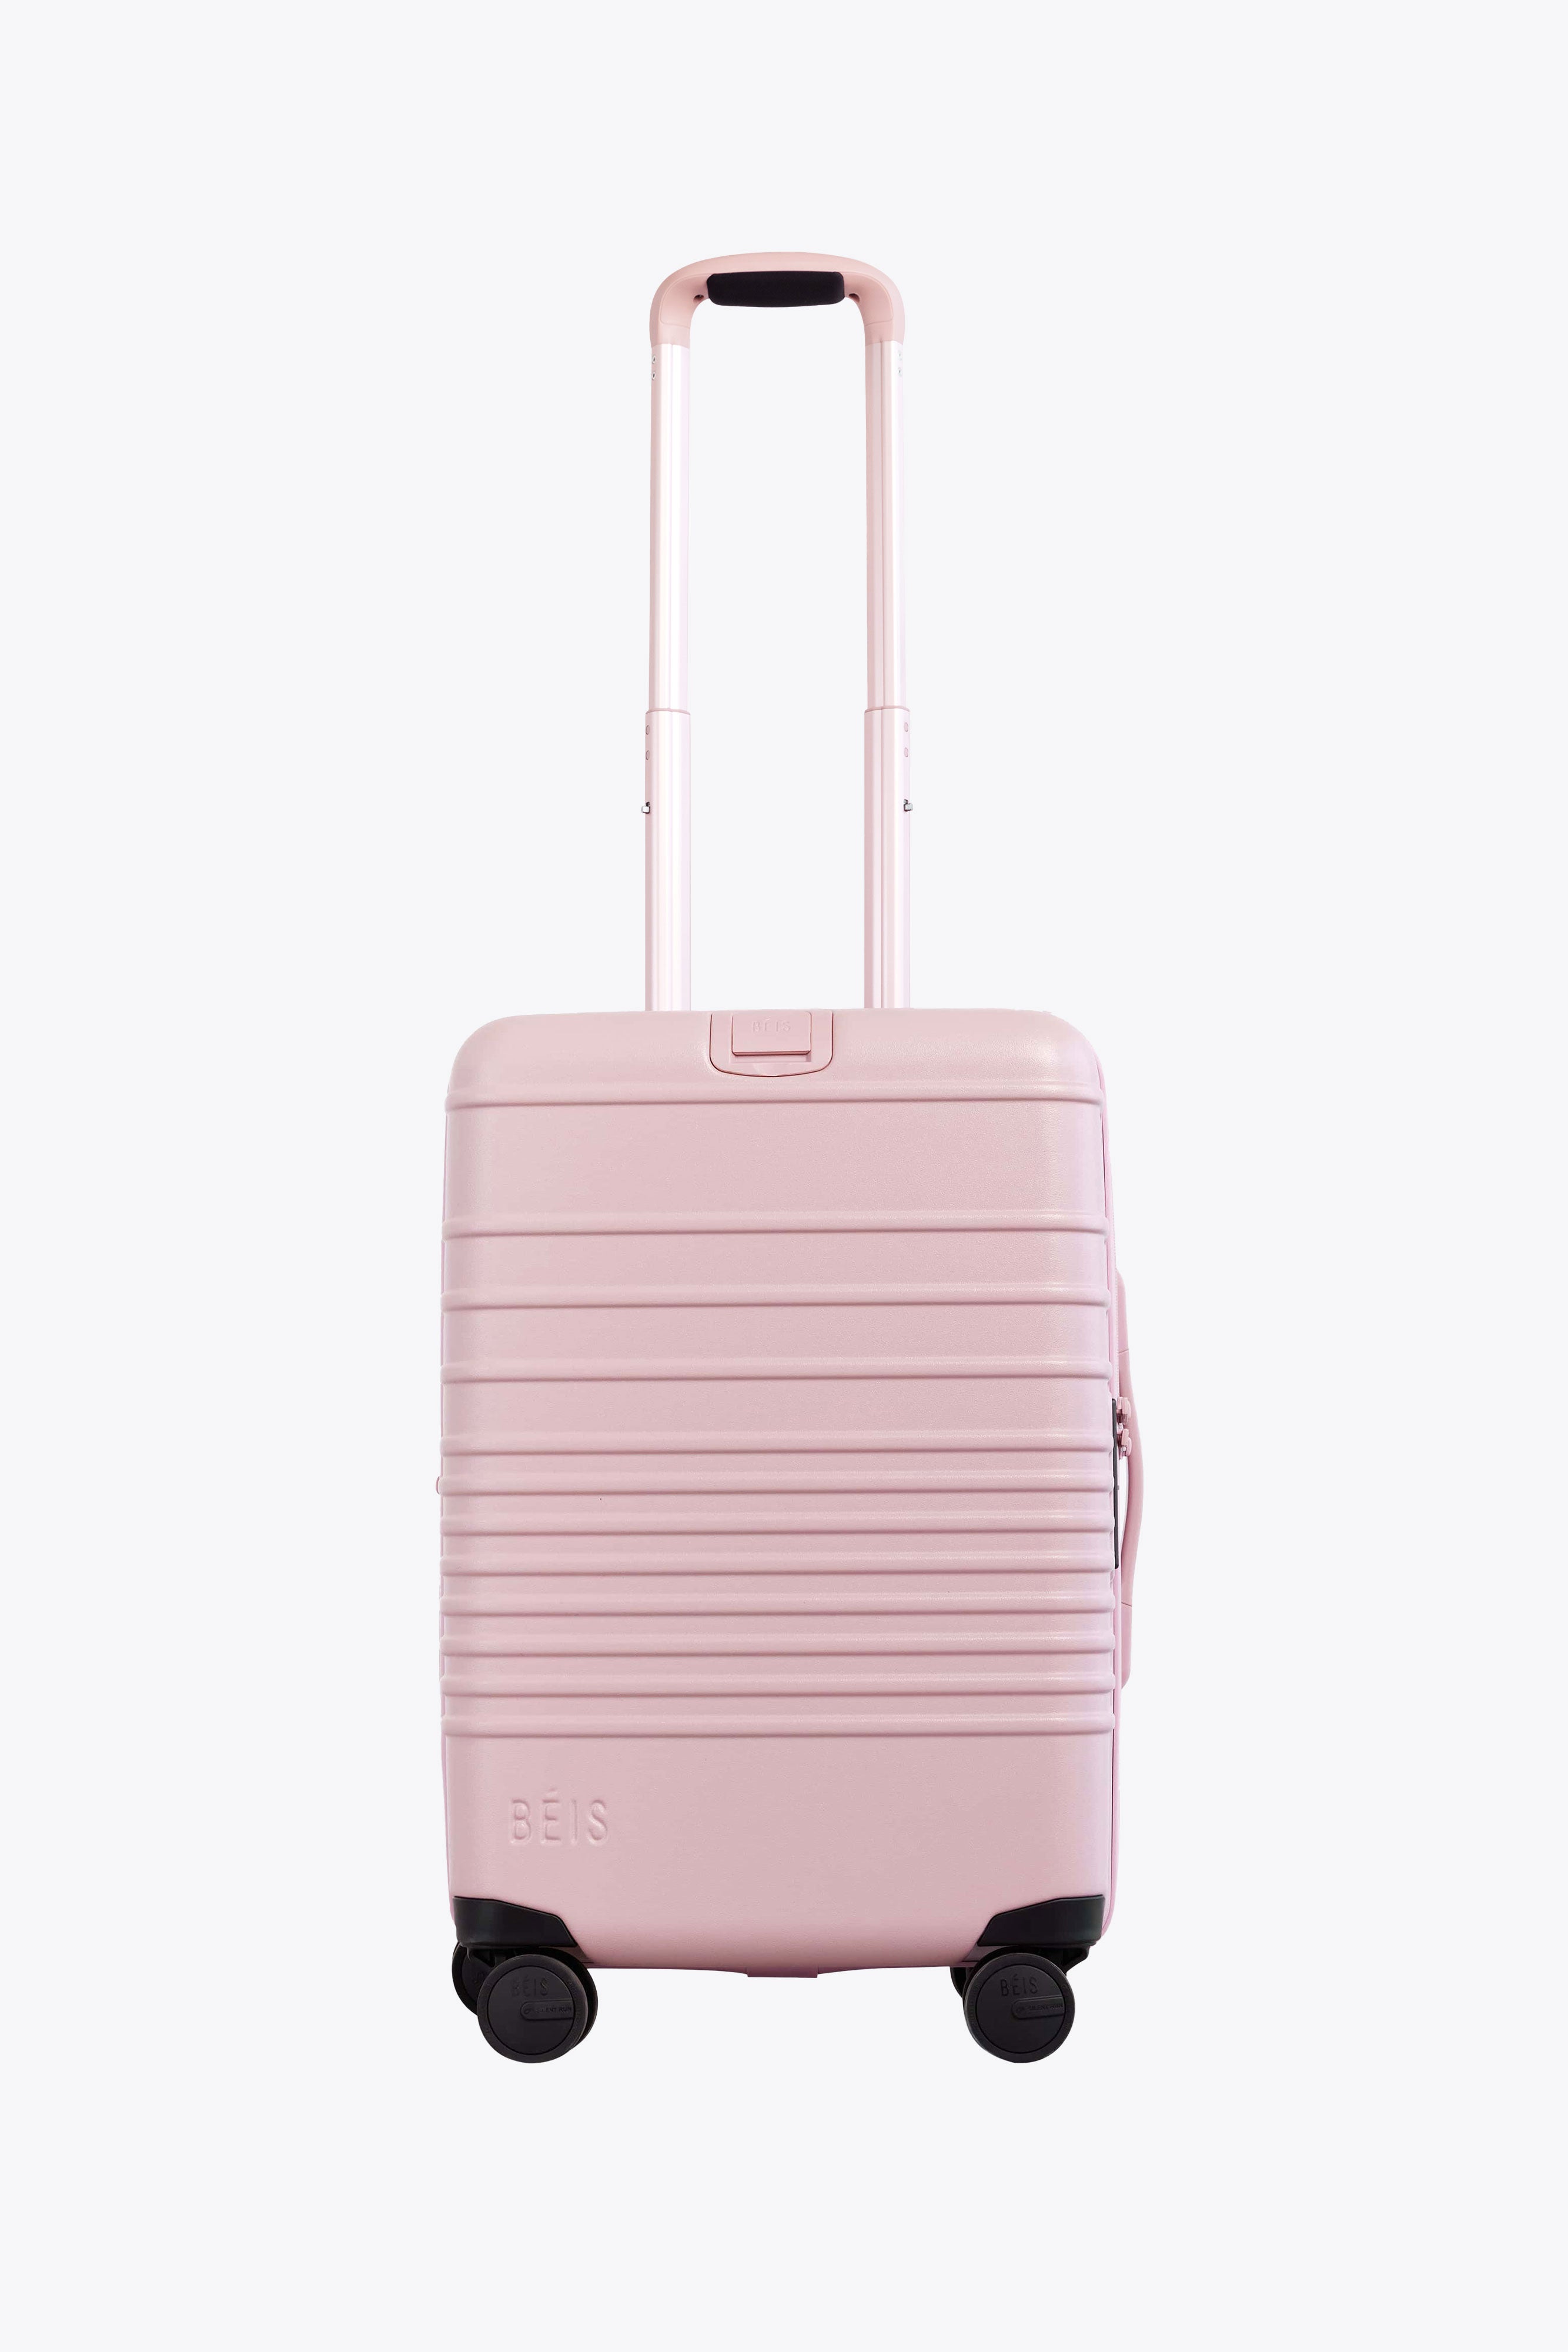 Single Pink Click & Carry Bag Handle, Infant Unisex